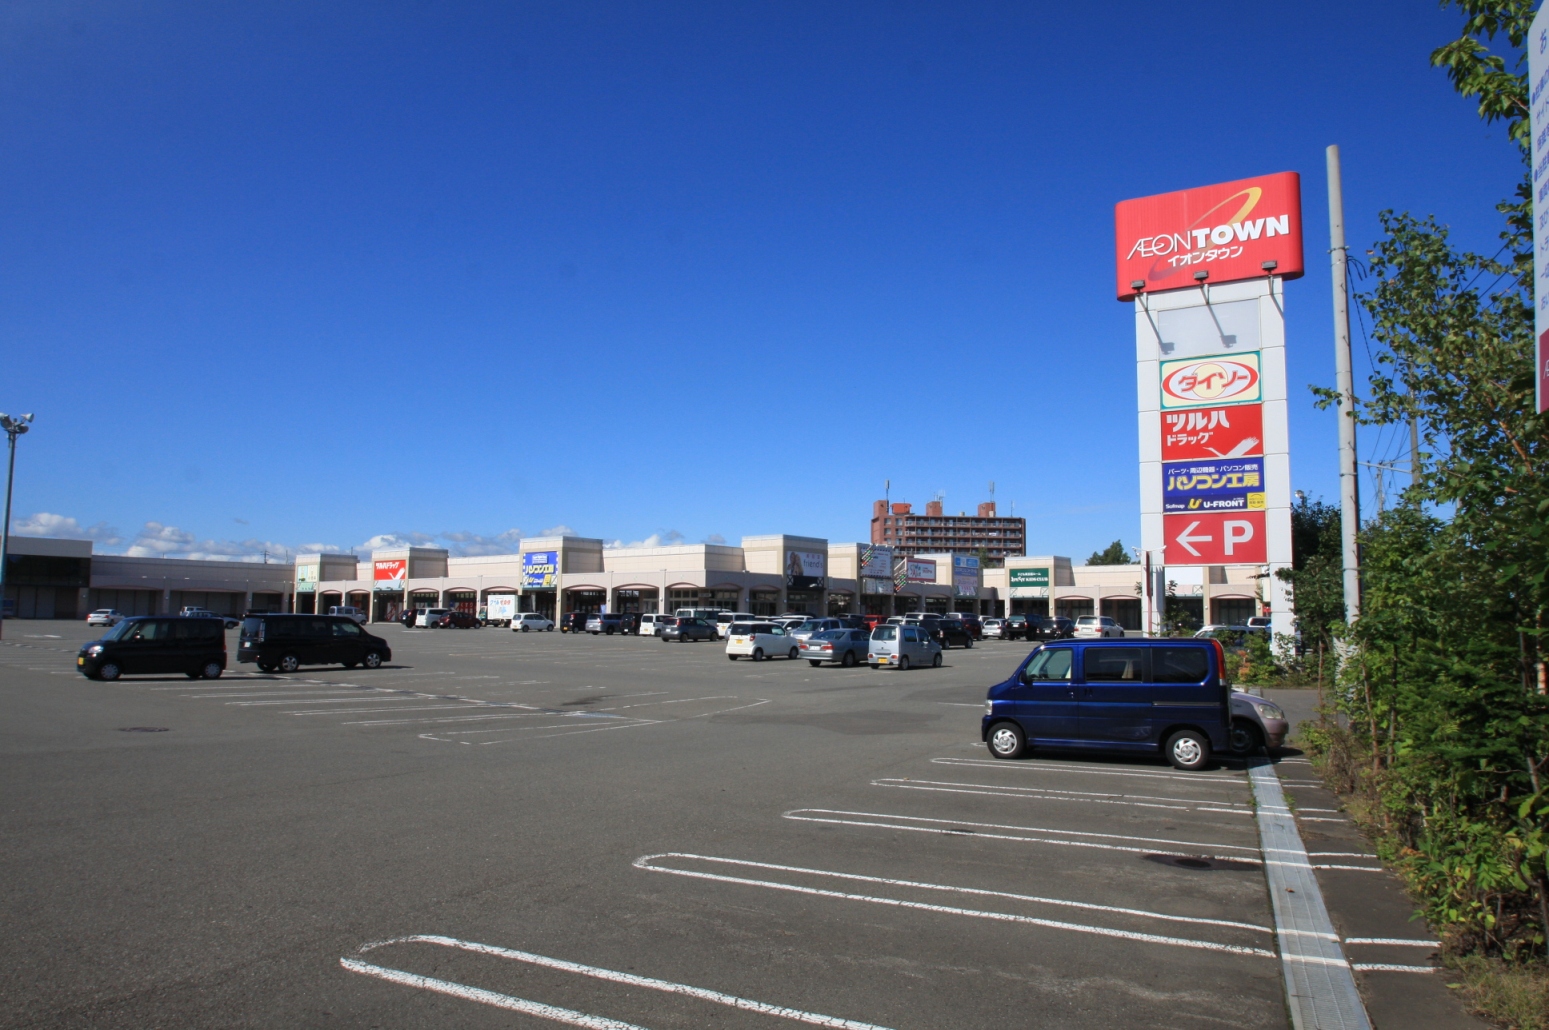 Shopping centre. 671m until ion Town Sapporo Hiraoka store (shopping center)